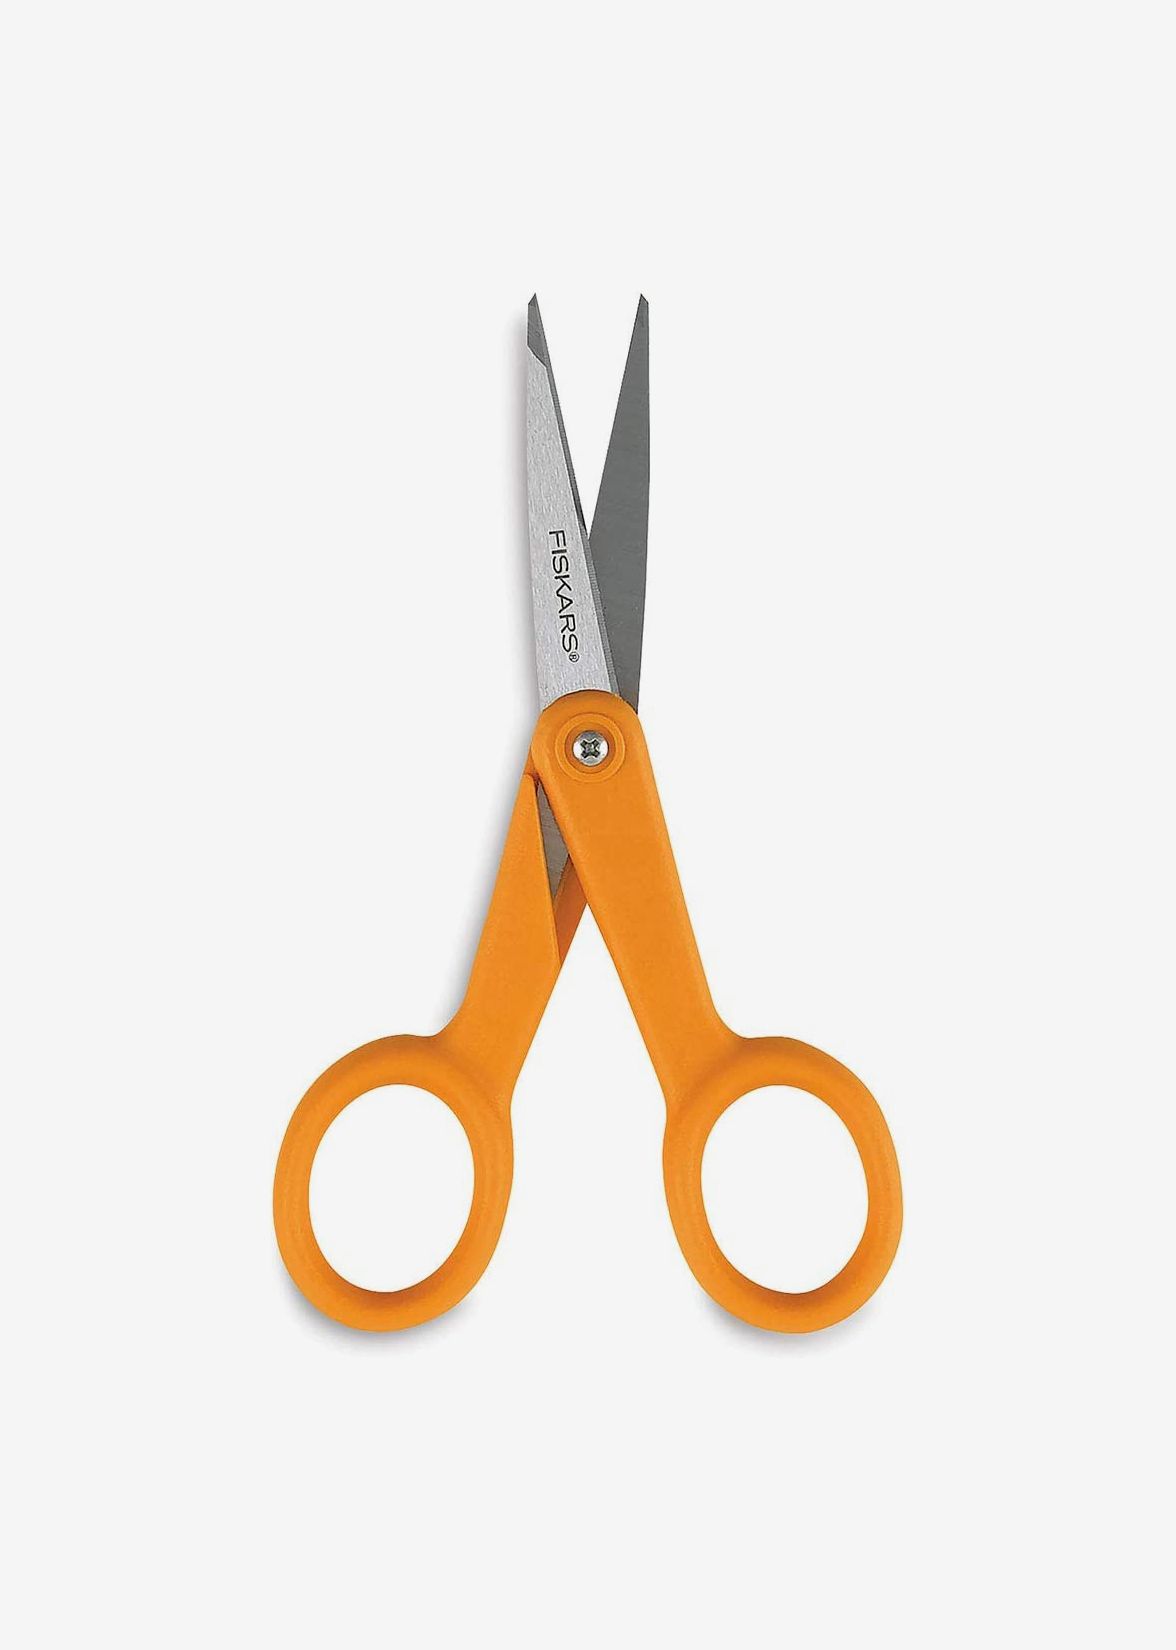 Review: Fiskars Desktop Scissors Sharpener - Sew Wrong